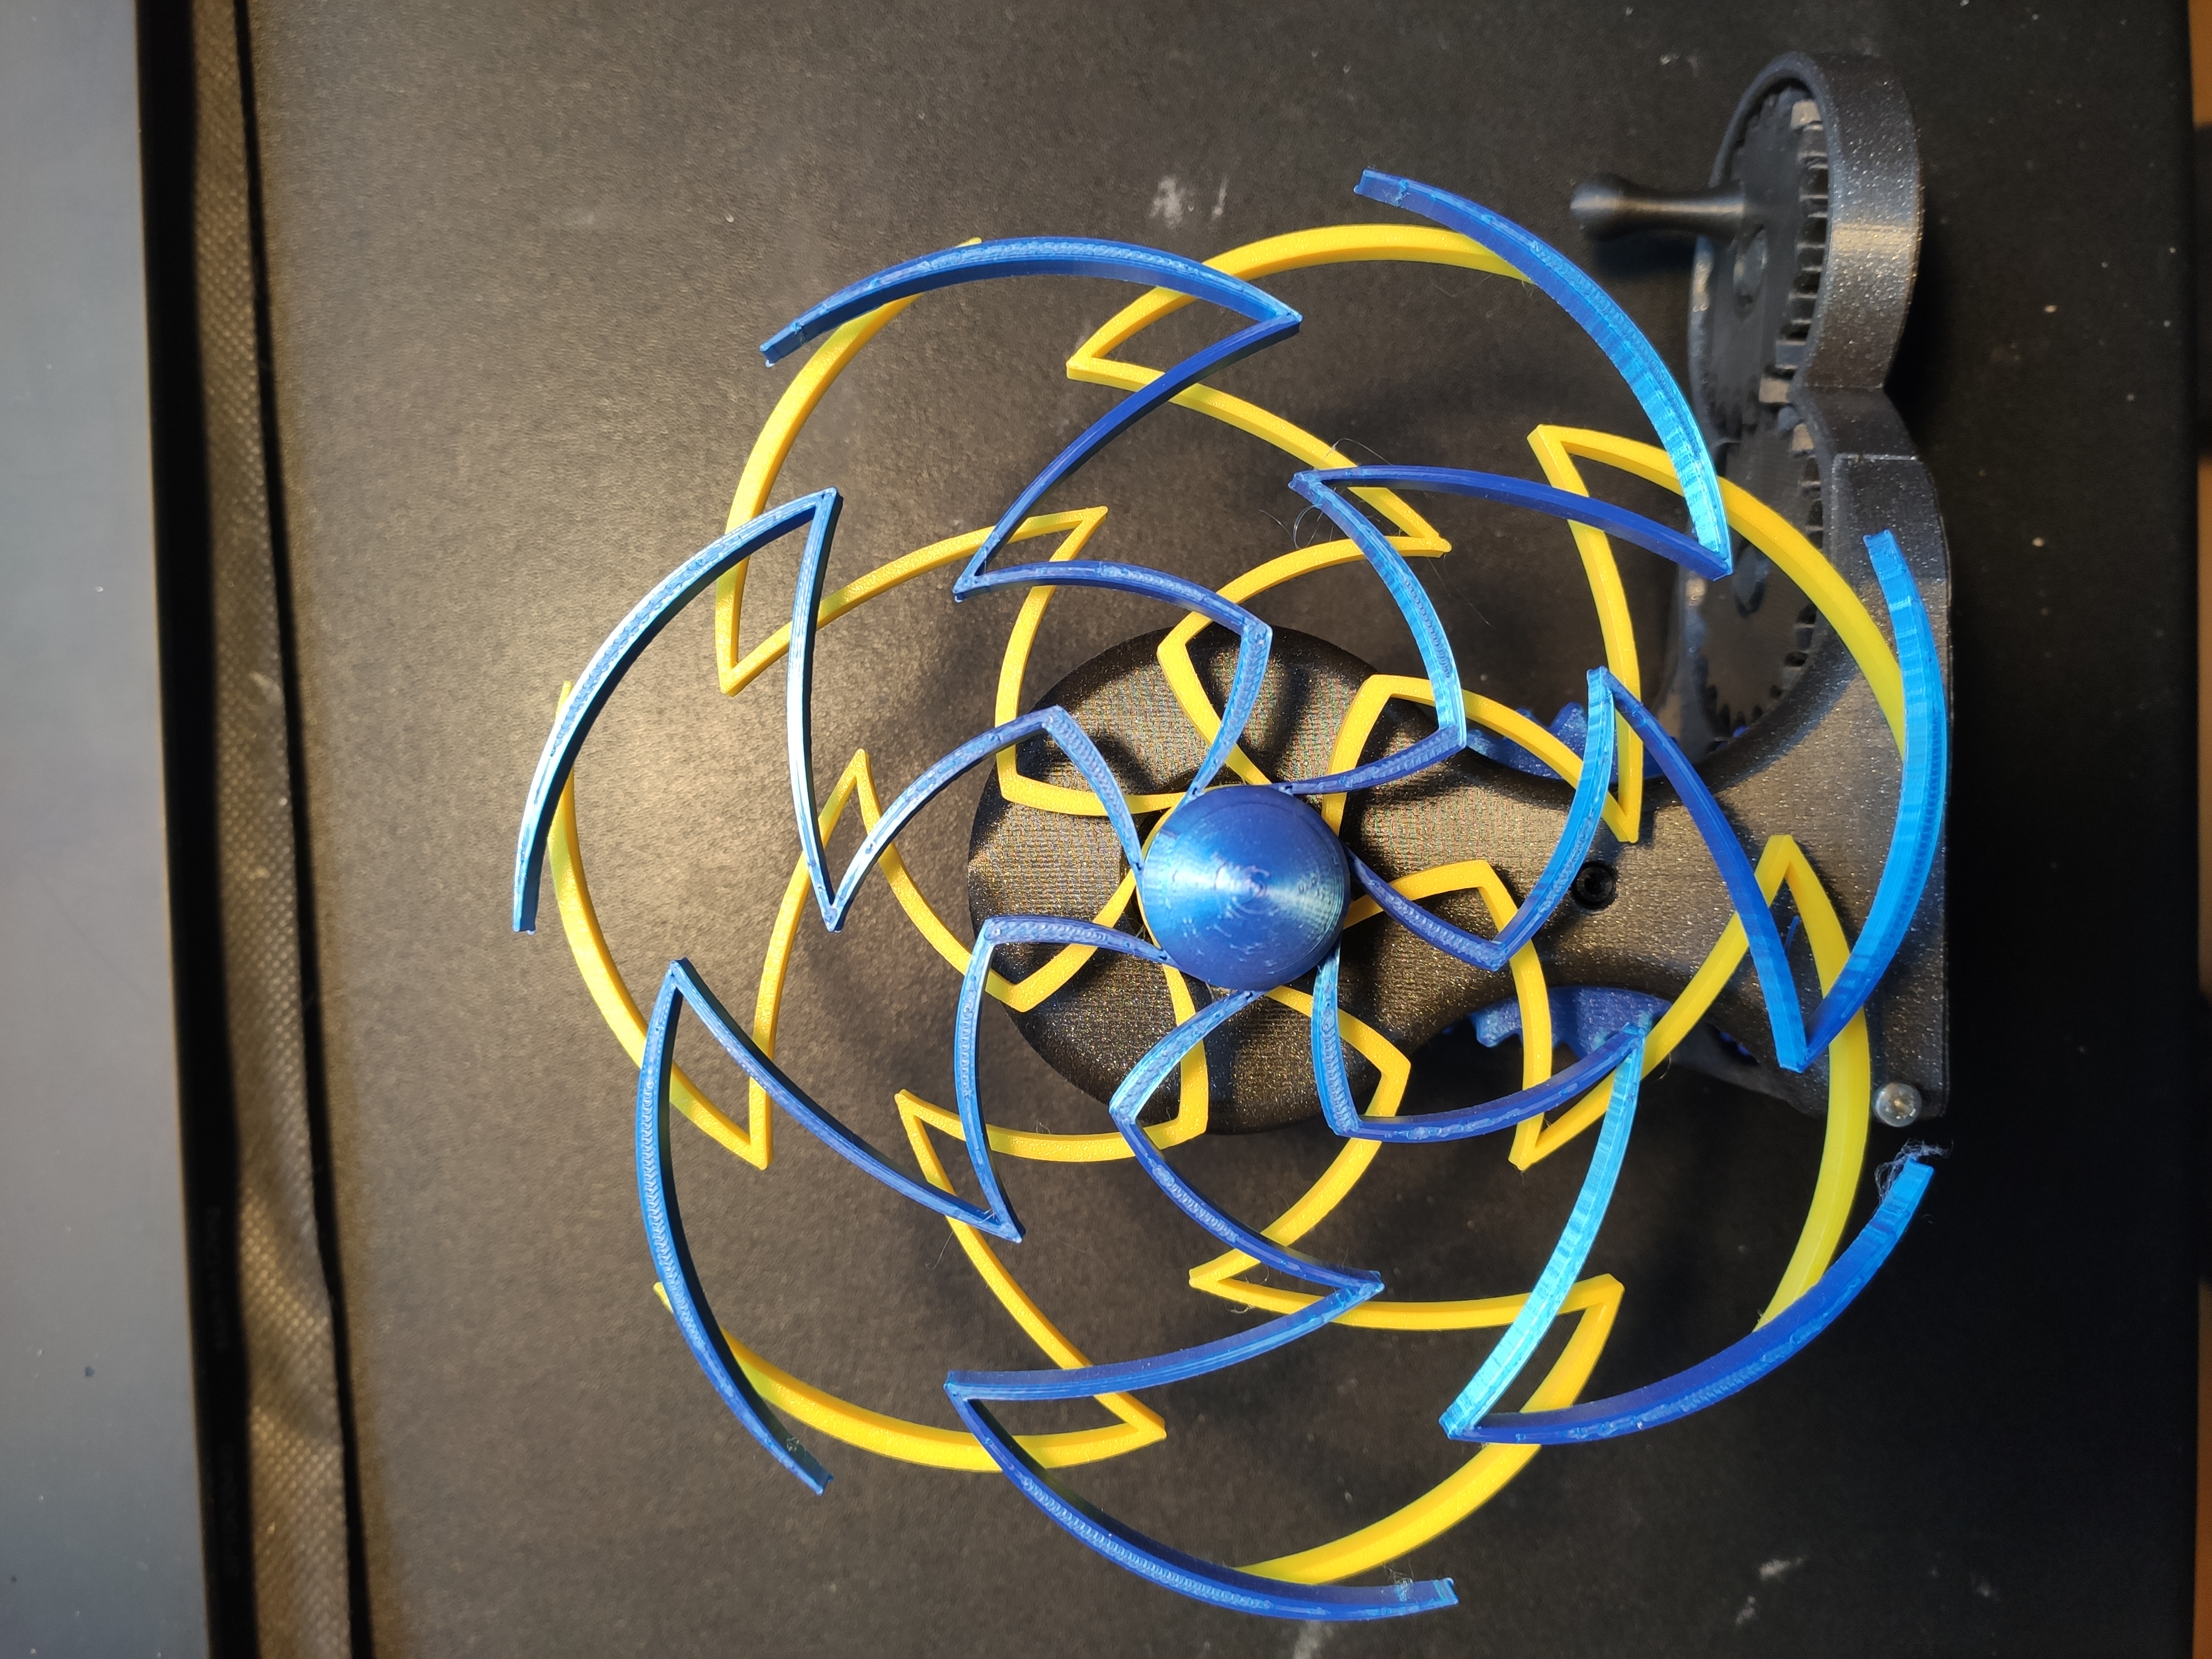 Kinetic sculpture: contra rotating discs